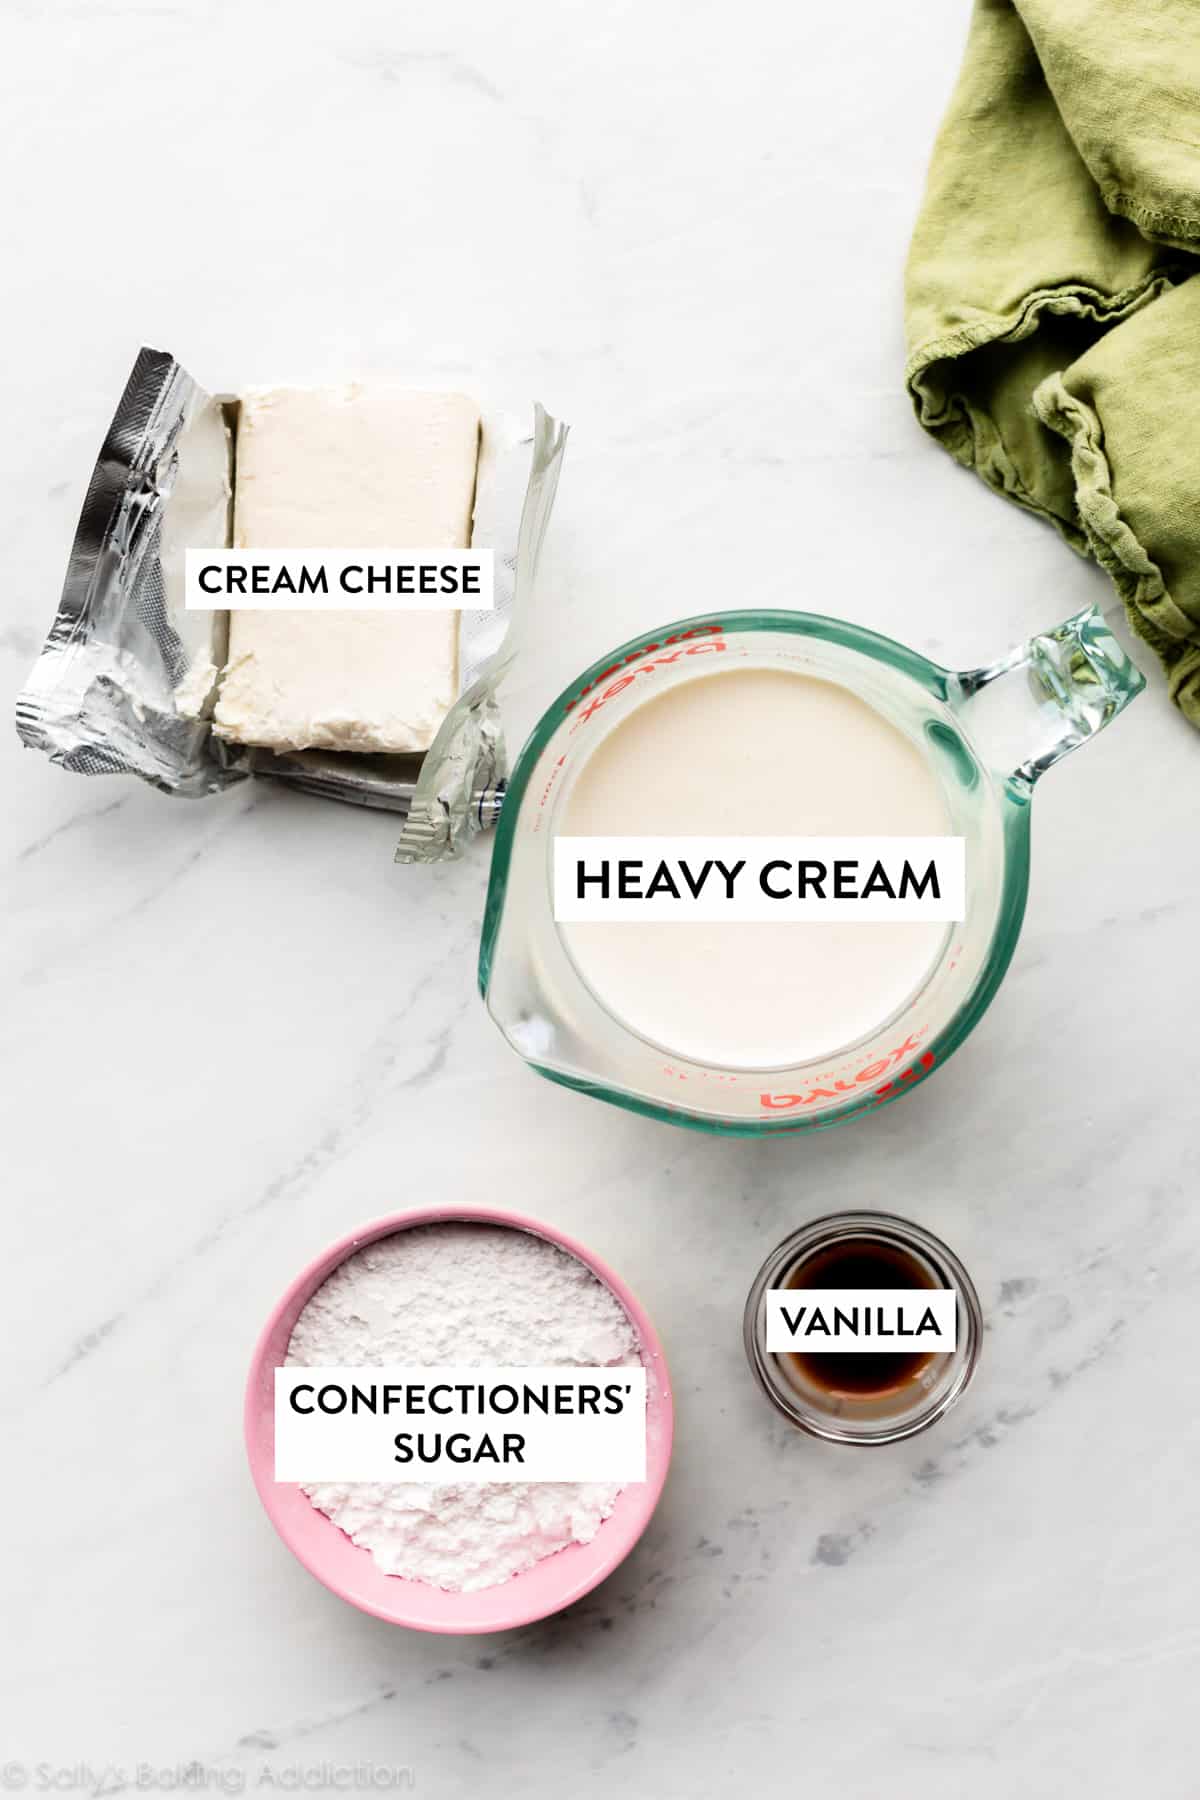 heavy cream, cream cheese, confectioners' sugar, and vanilla extract in bowls